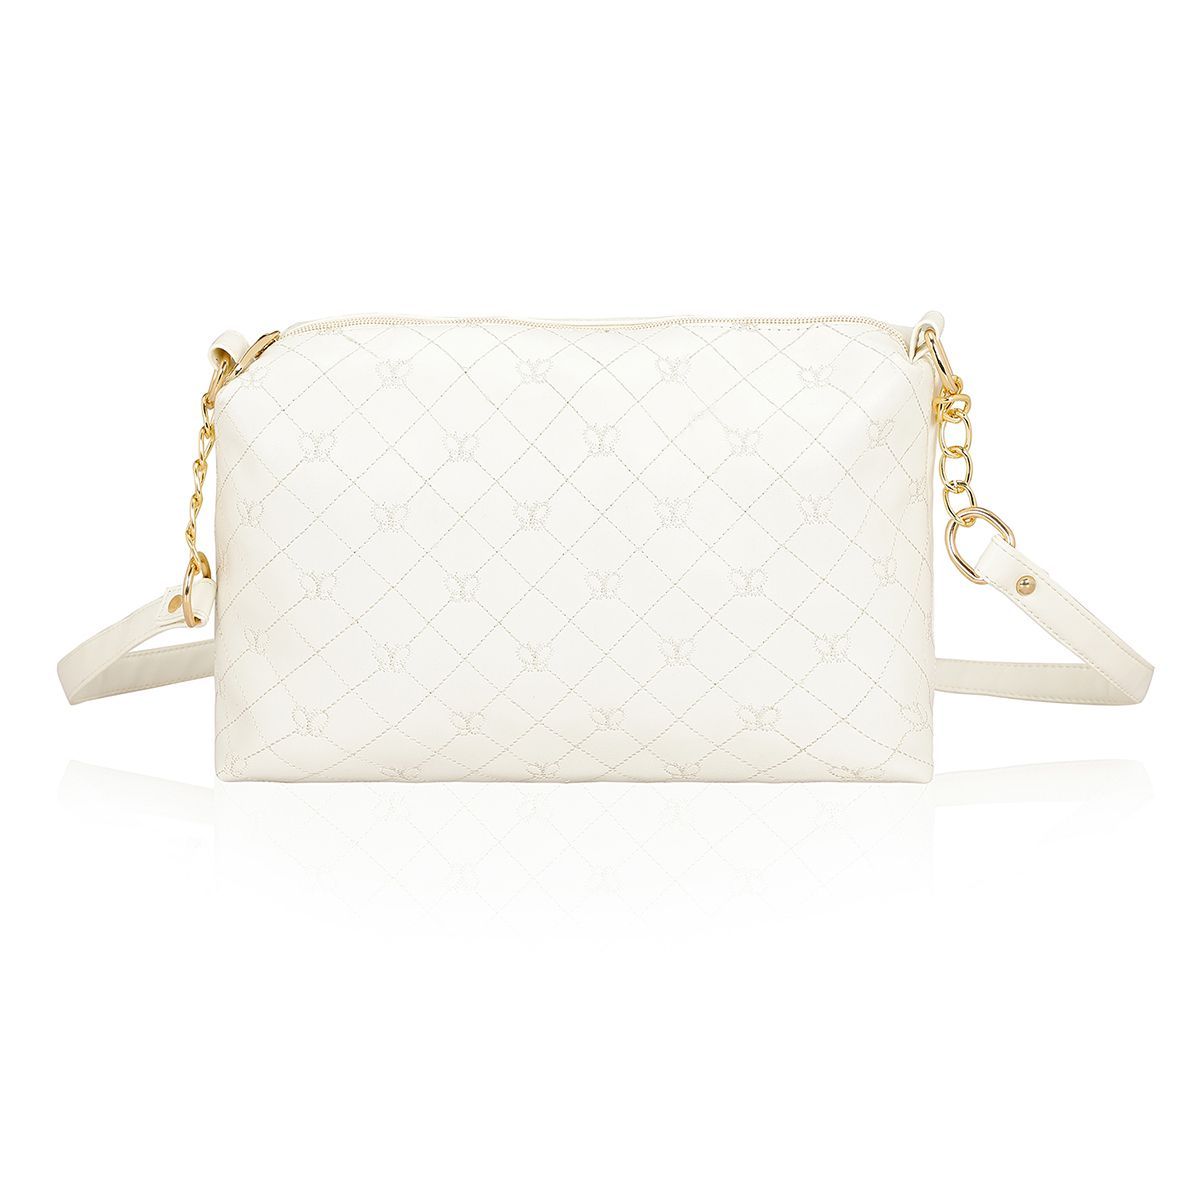 Minimalist Baguette Bag | Bags for teens, Baguette bag, White handbag